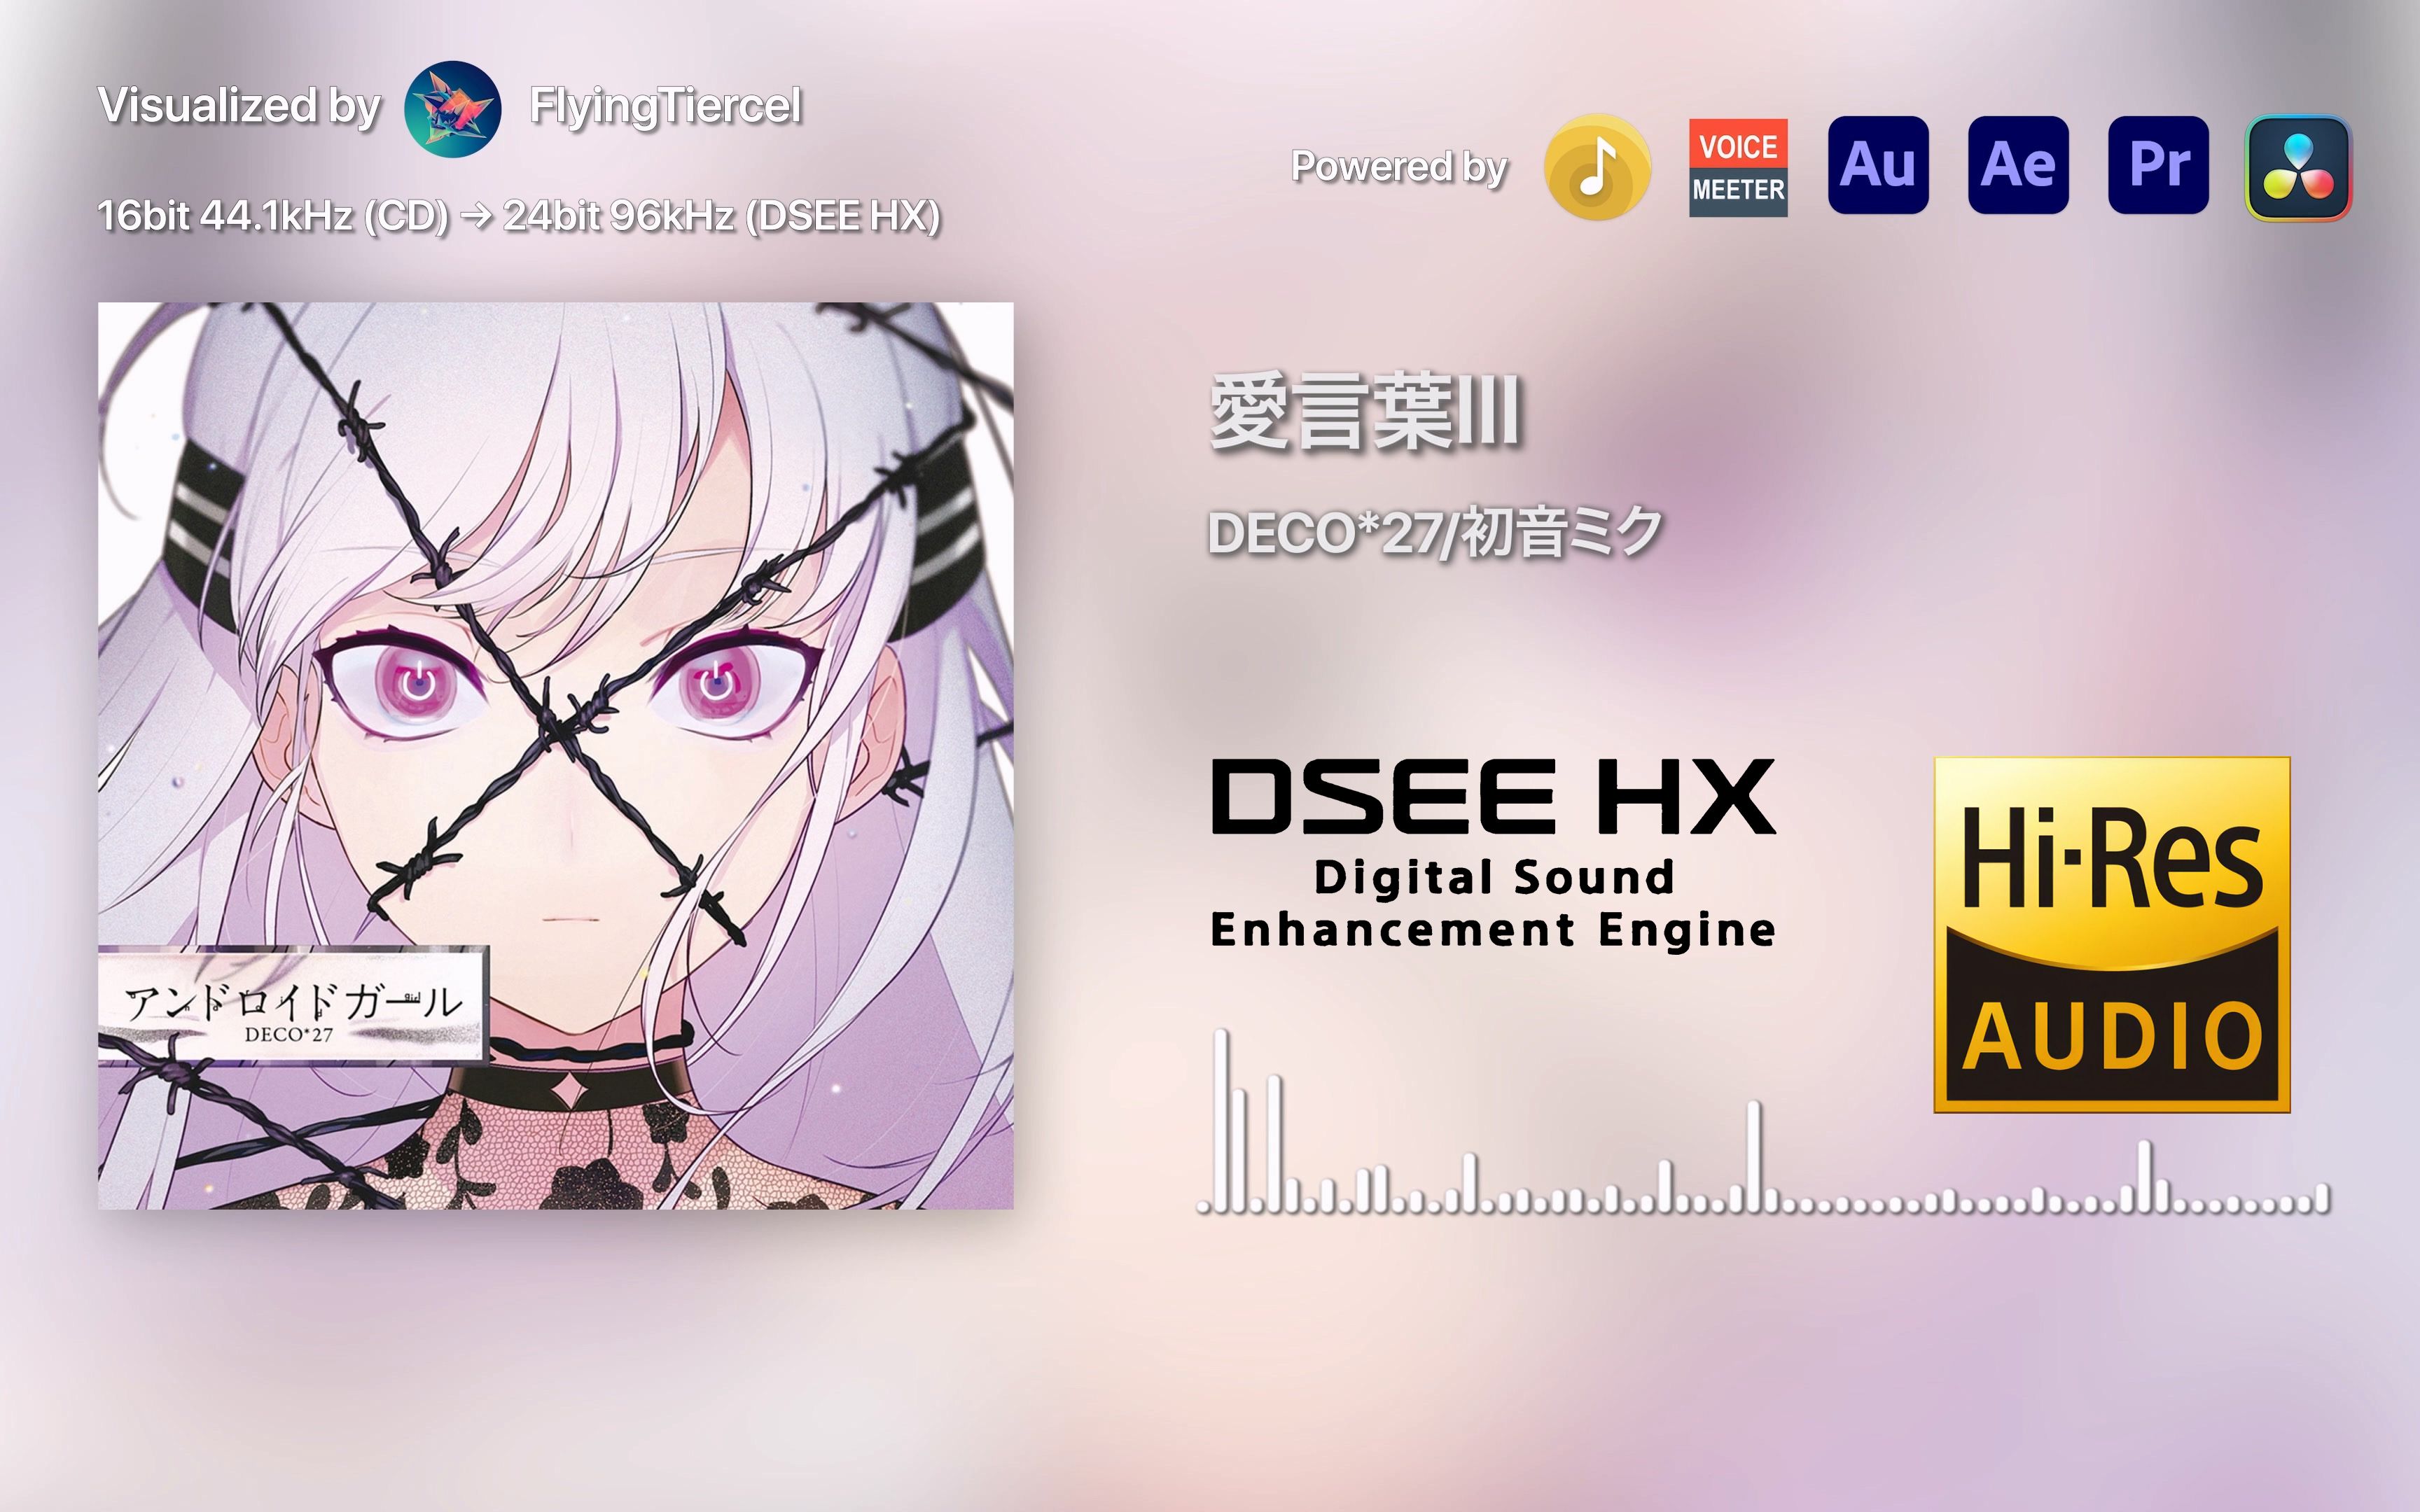 [4K Hi-Res] 愛言葉III - DECO*27/初音ミク [24bit/96kHz by DSEE HX] 音频可视化